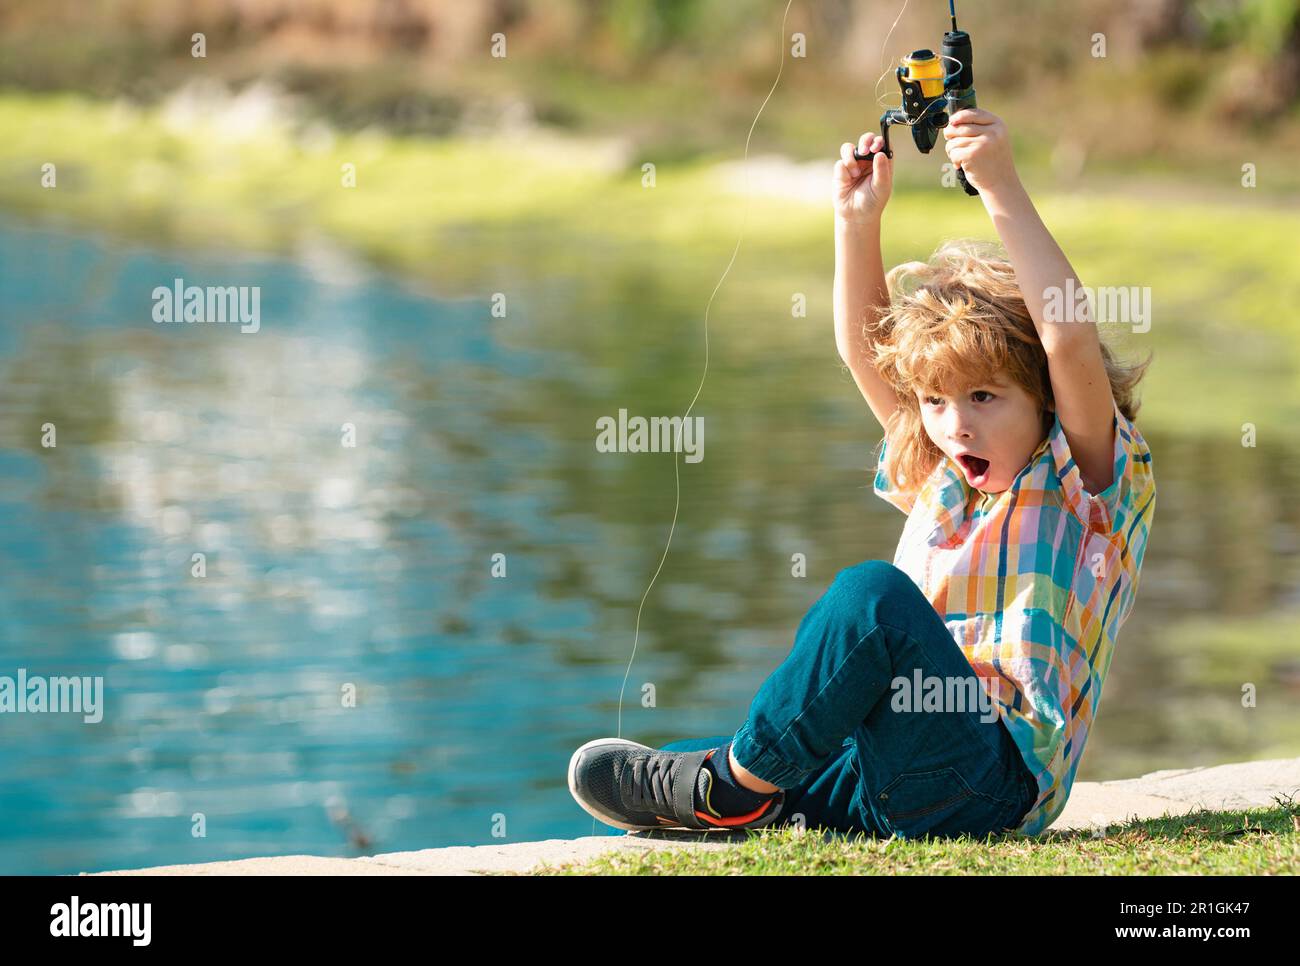 Funny happy little kid fishing on weekend. A fisherman boy stands